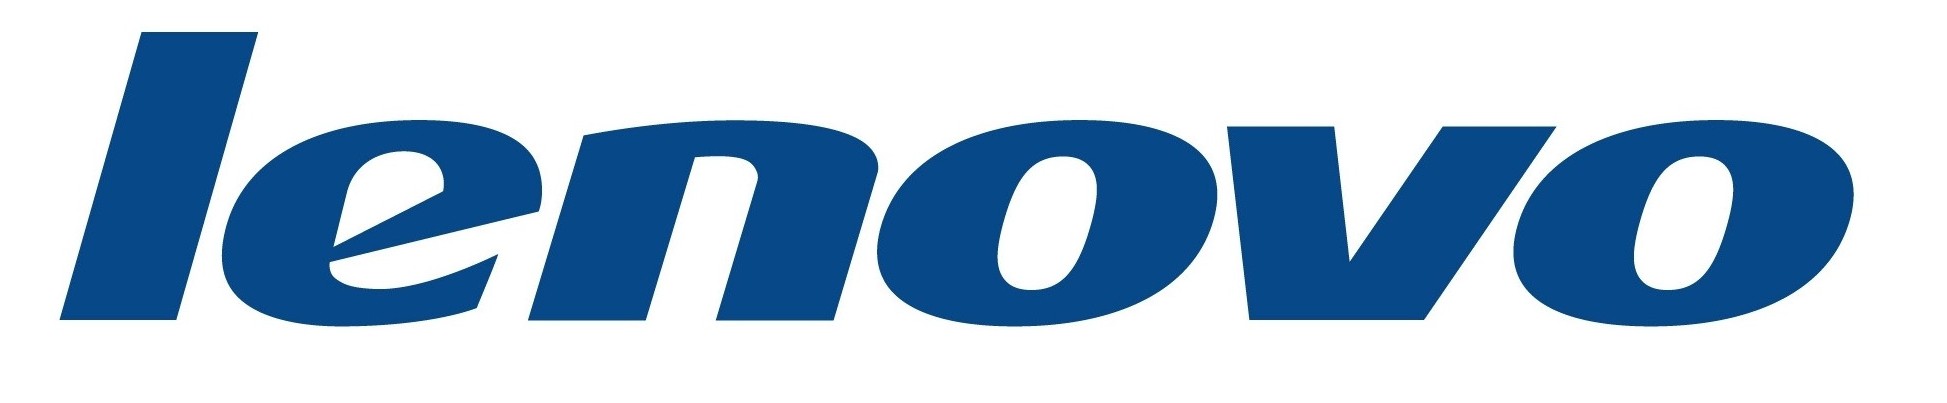 Lenovo official logo drivers e1442174851851